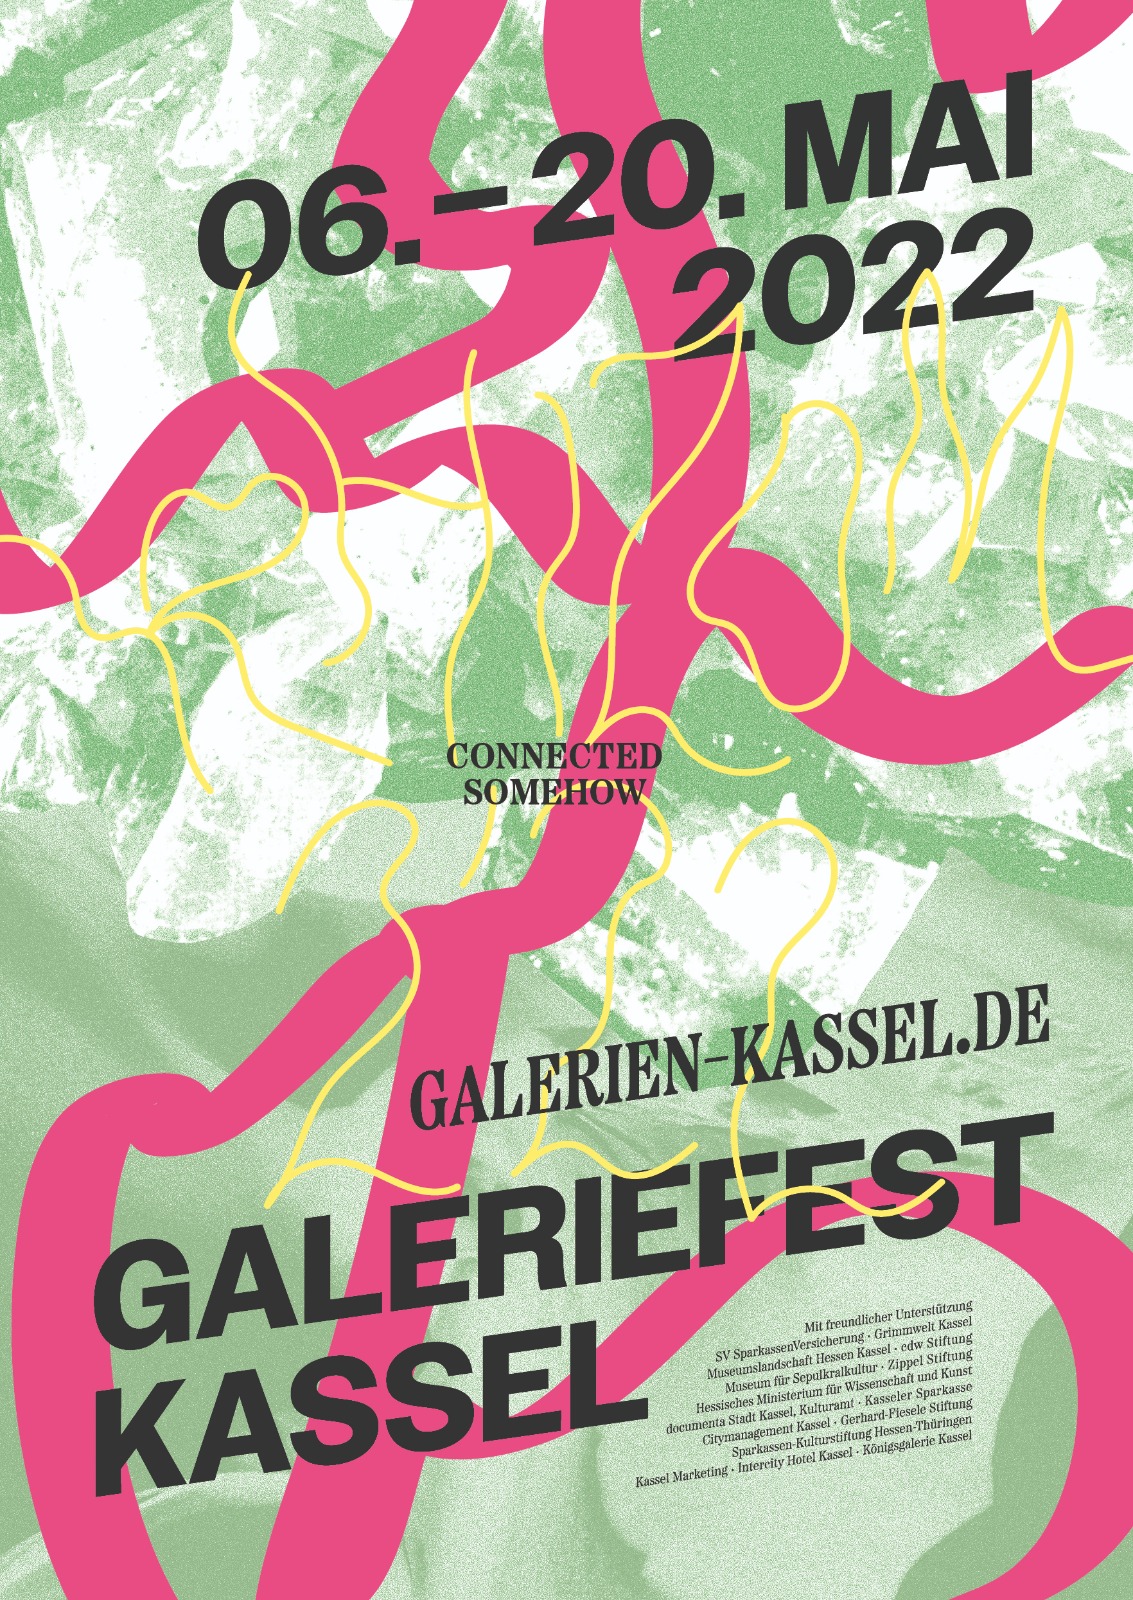 Galeriefest Kassel - Rhizom 2'22